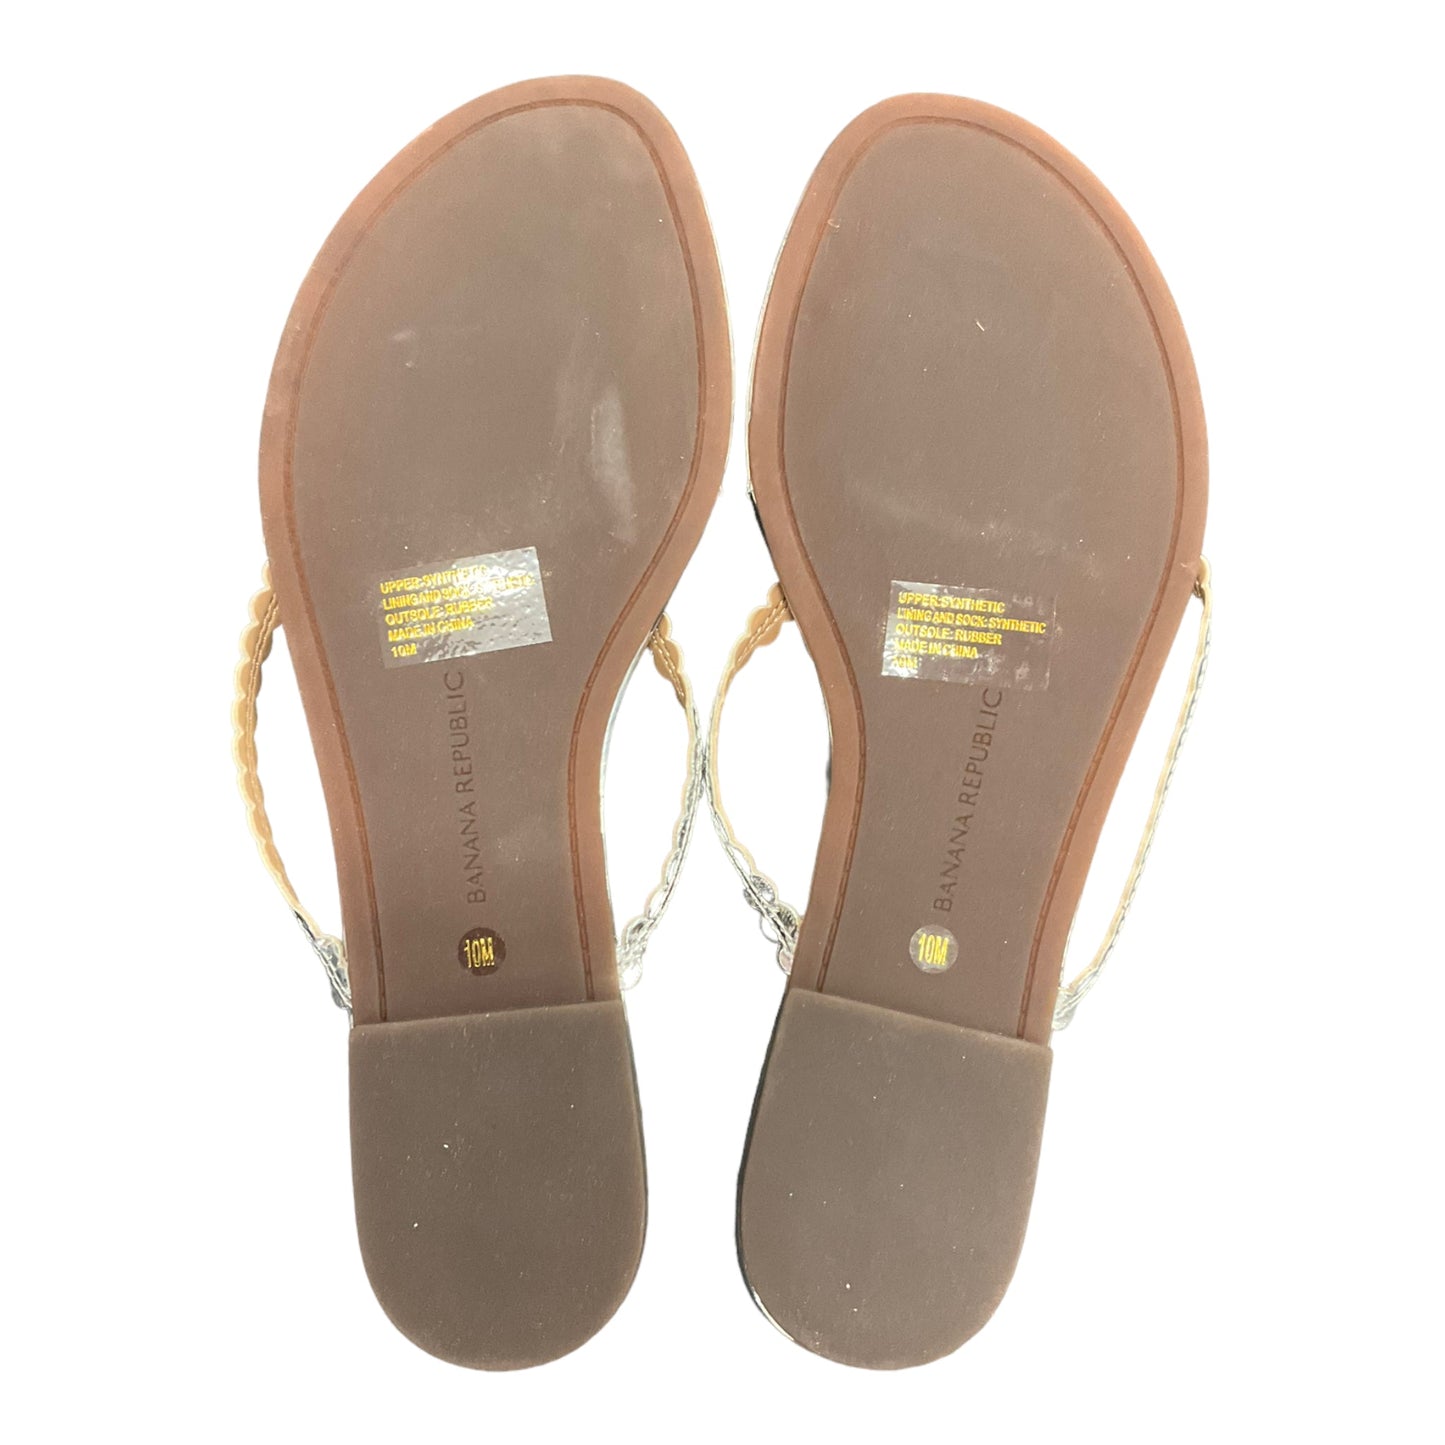 Sandals Flip Flops By Banana Republic  Size: 10